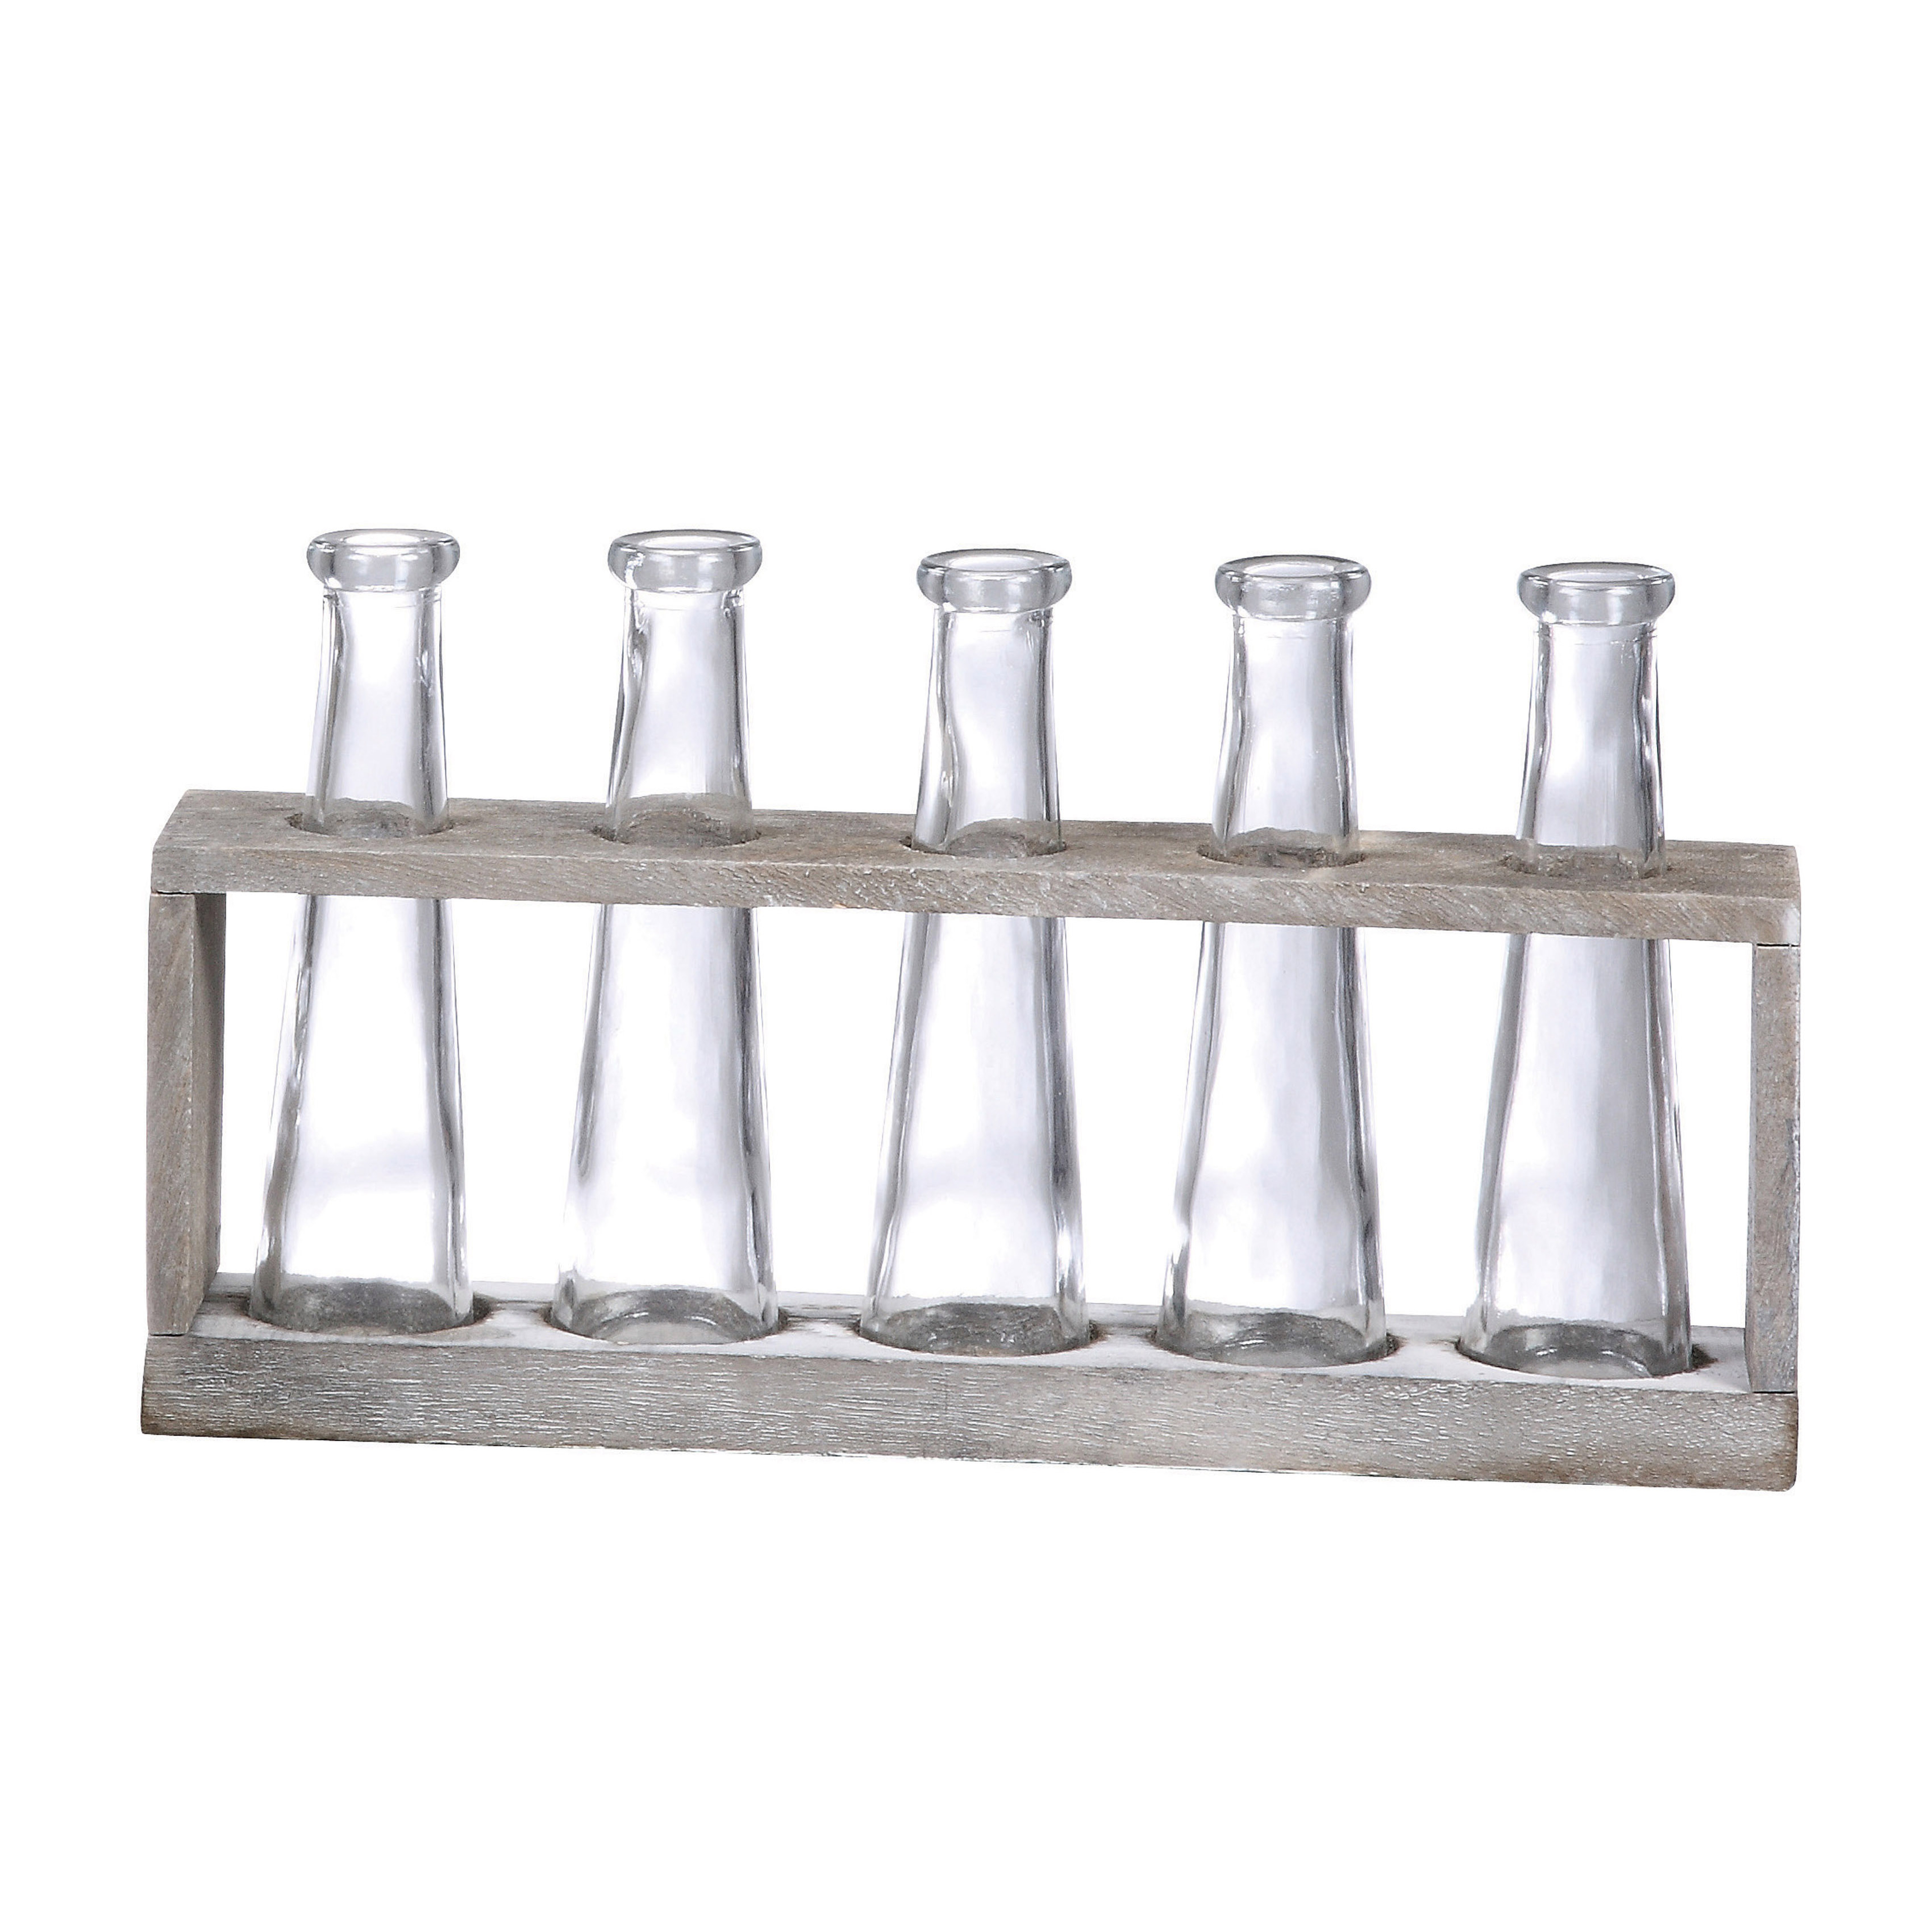 Distressed Grey Wood Vase Holder with 5 Glass Vases - Nomad Home